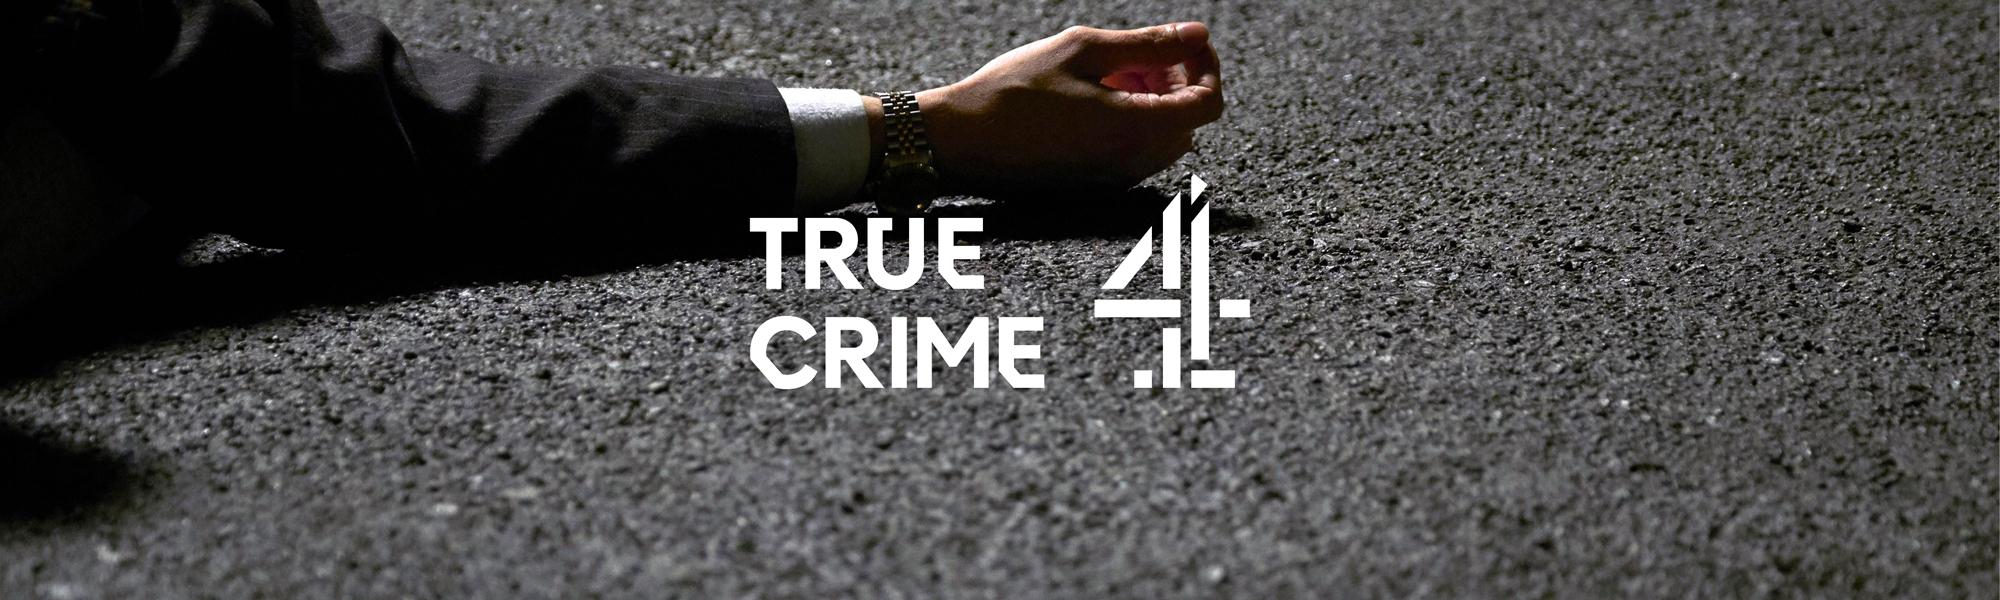 True Crime on 4 